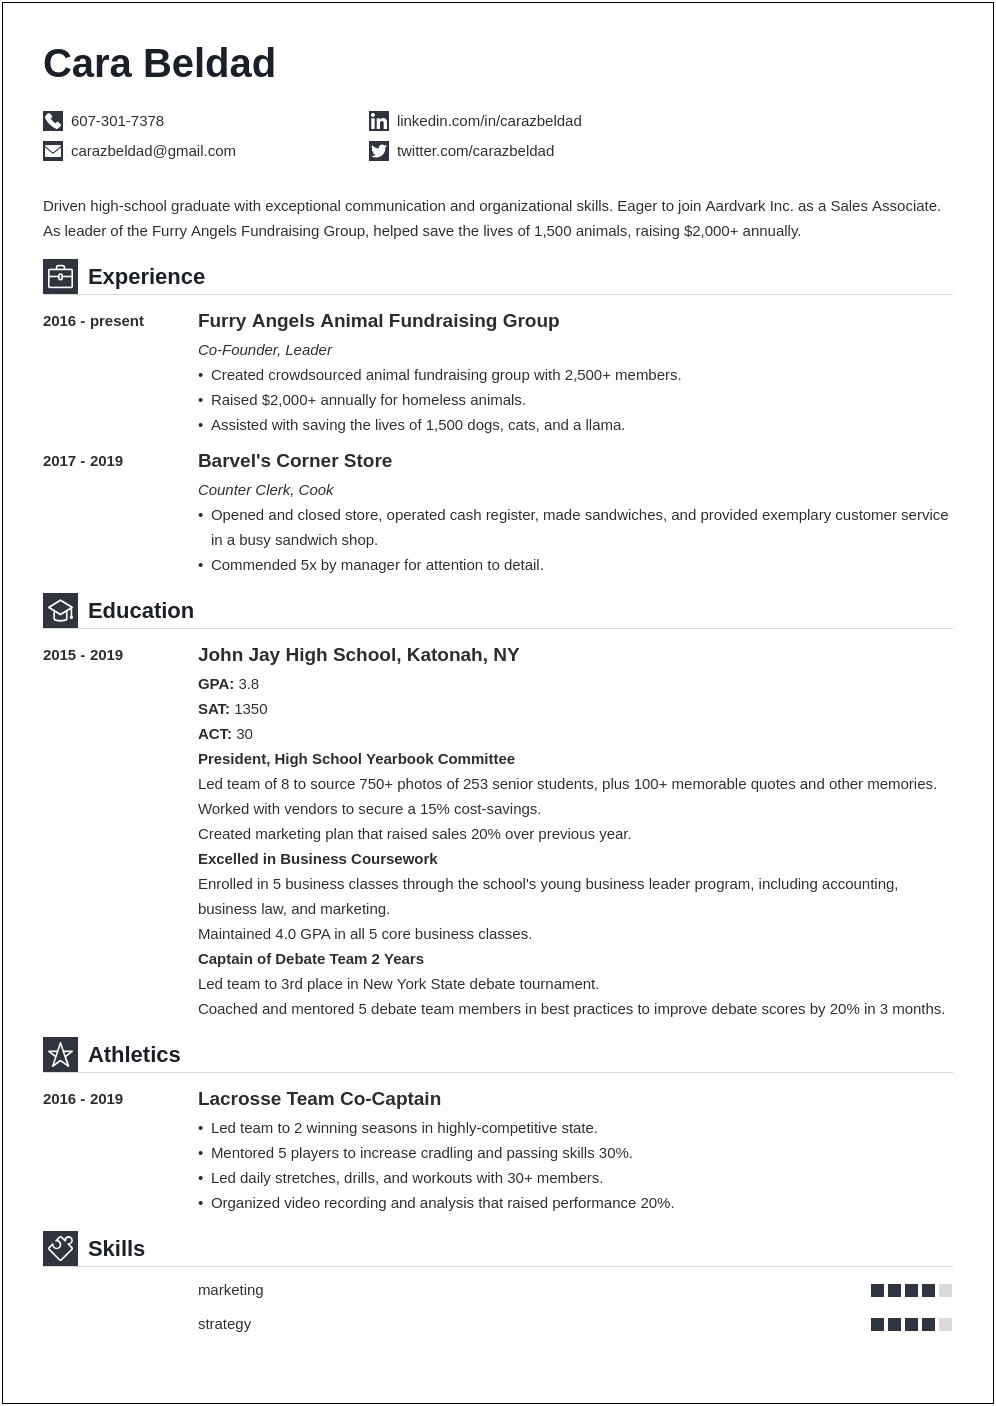 High School Resume Format Examples